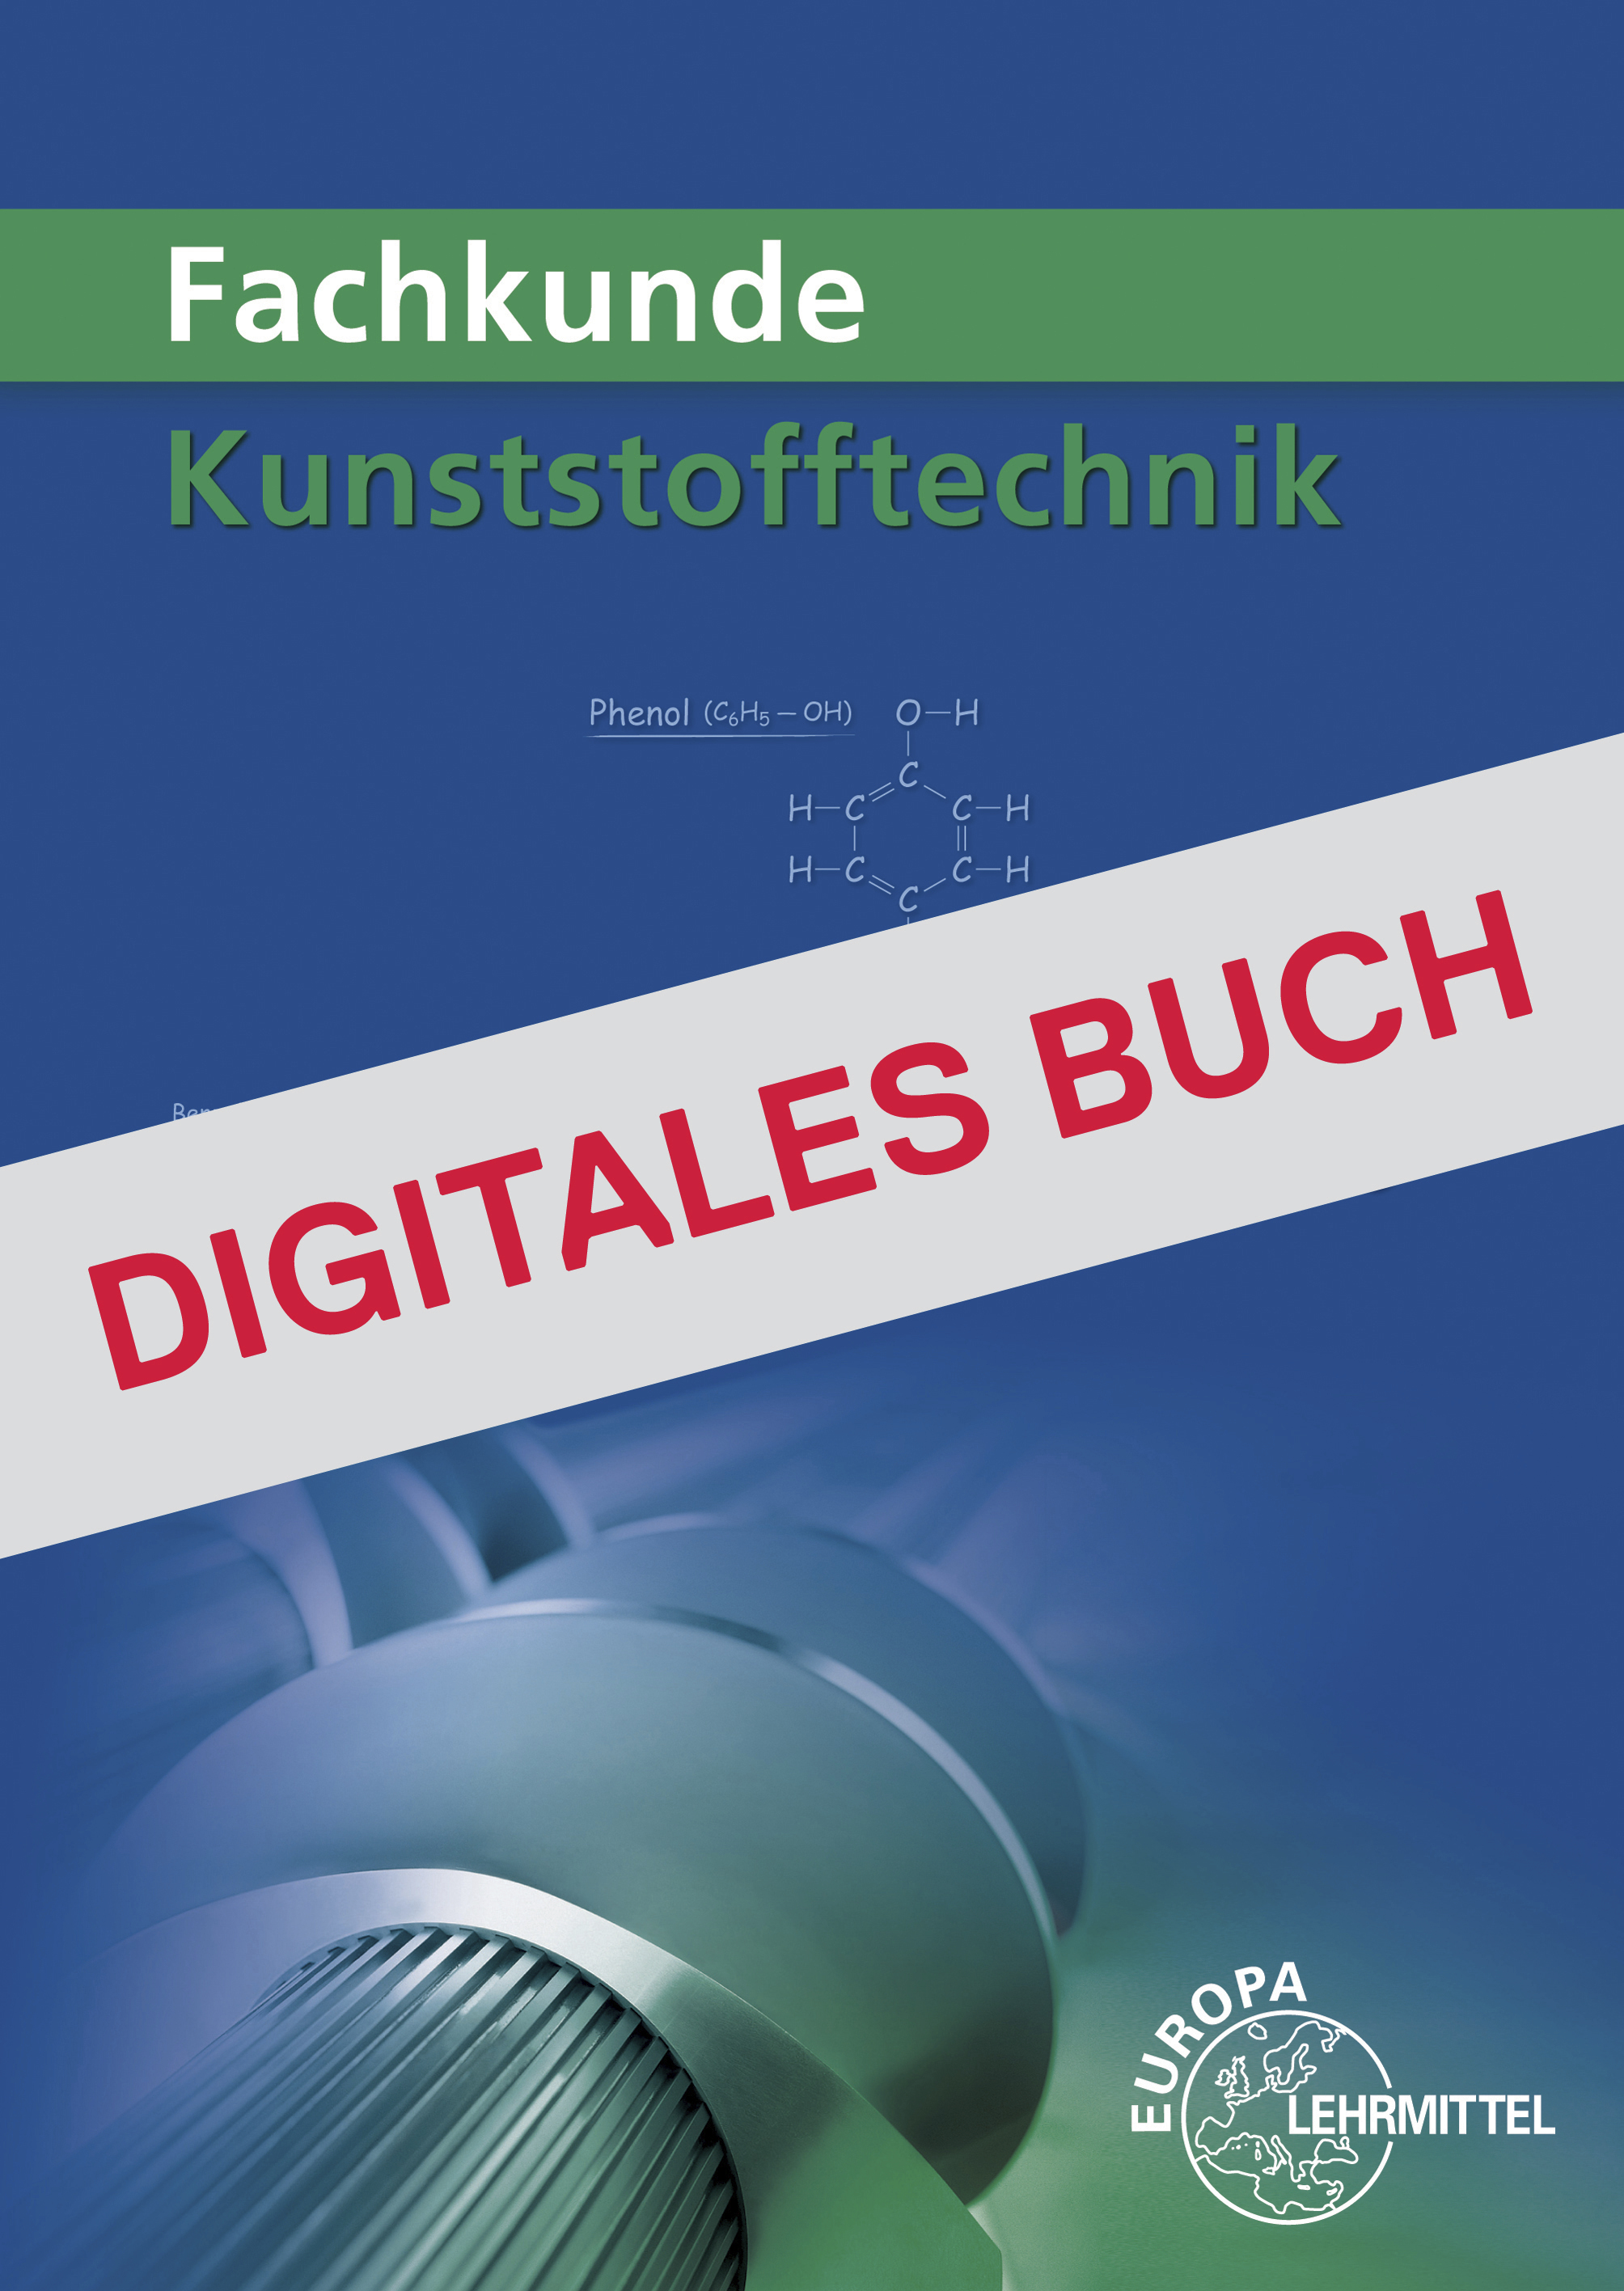 Fachkunde Kunststofftechnik - Digitales Buch